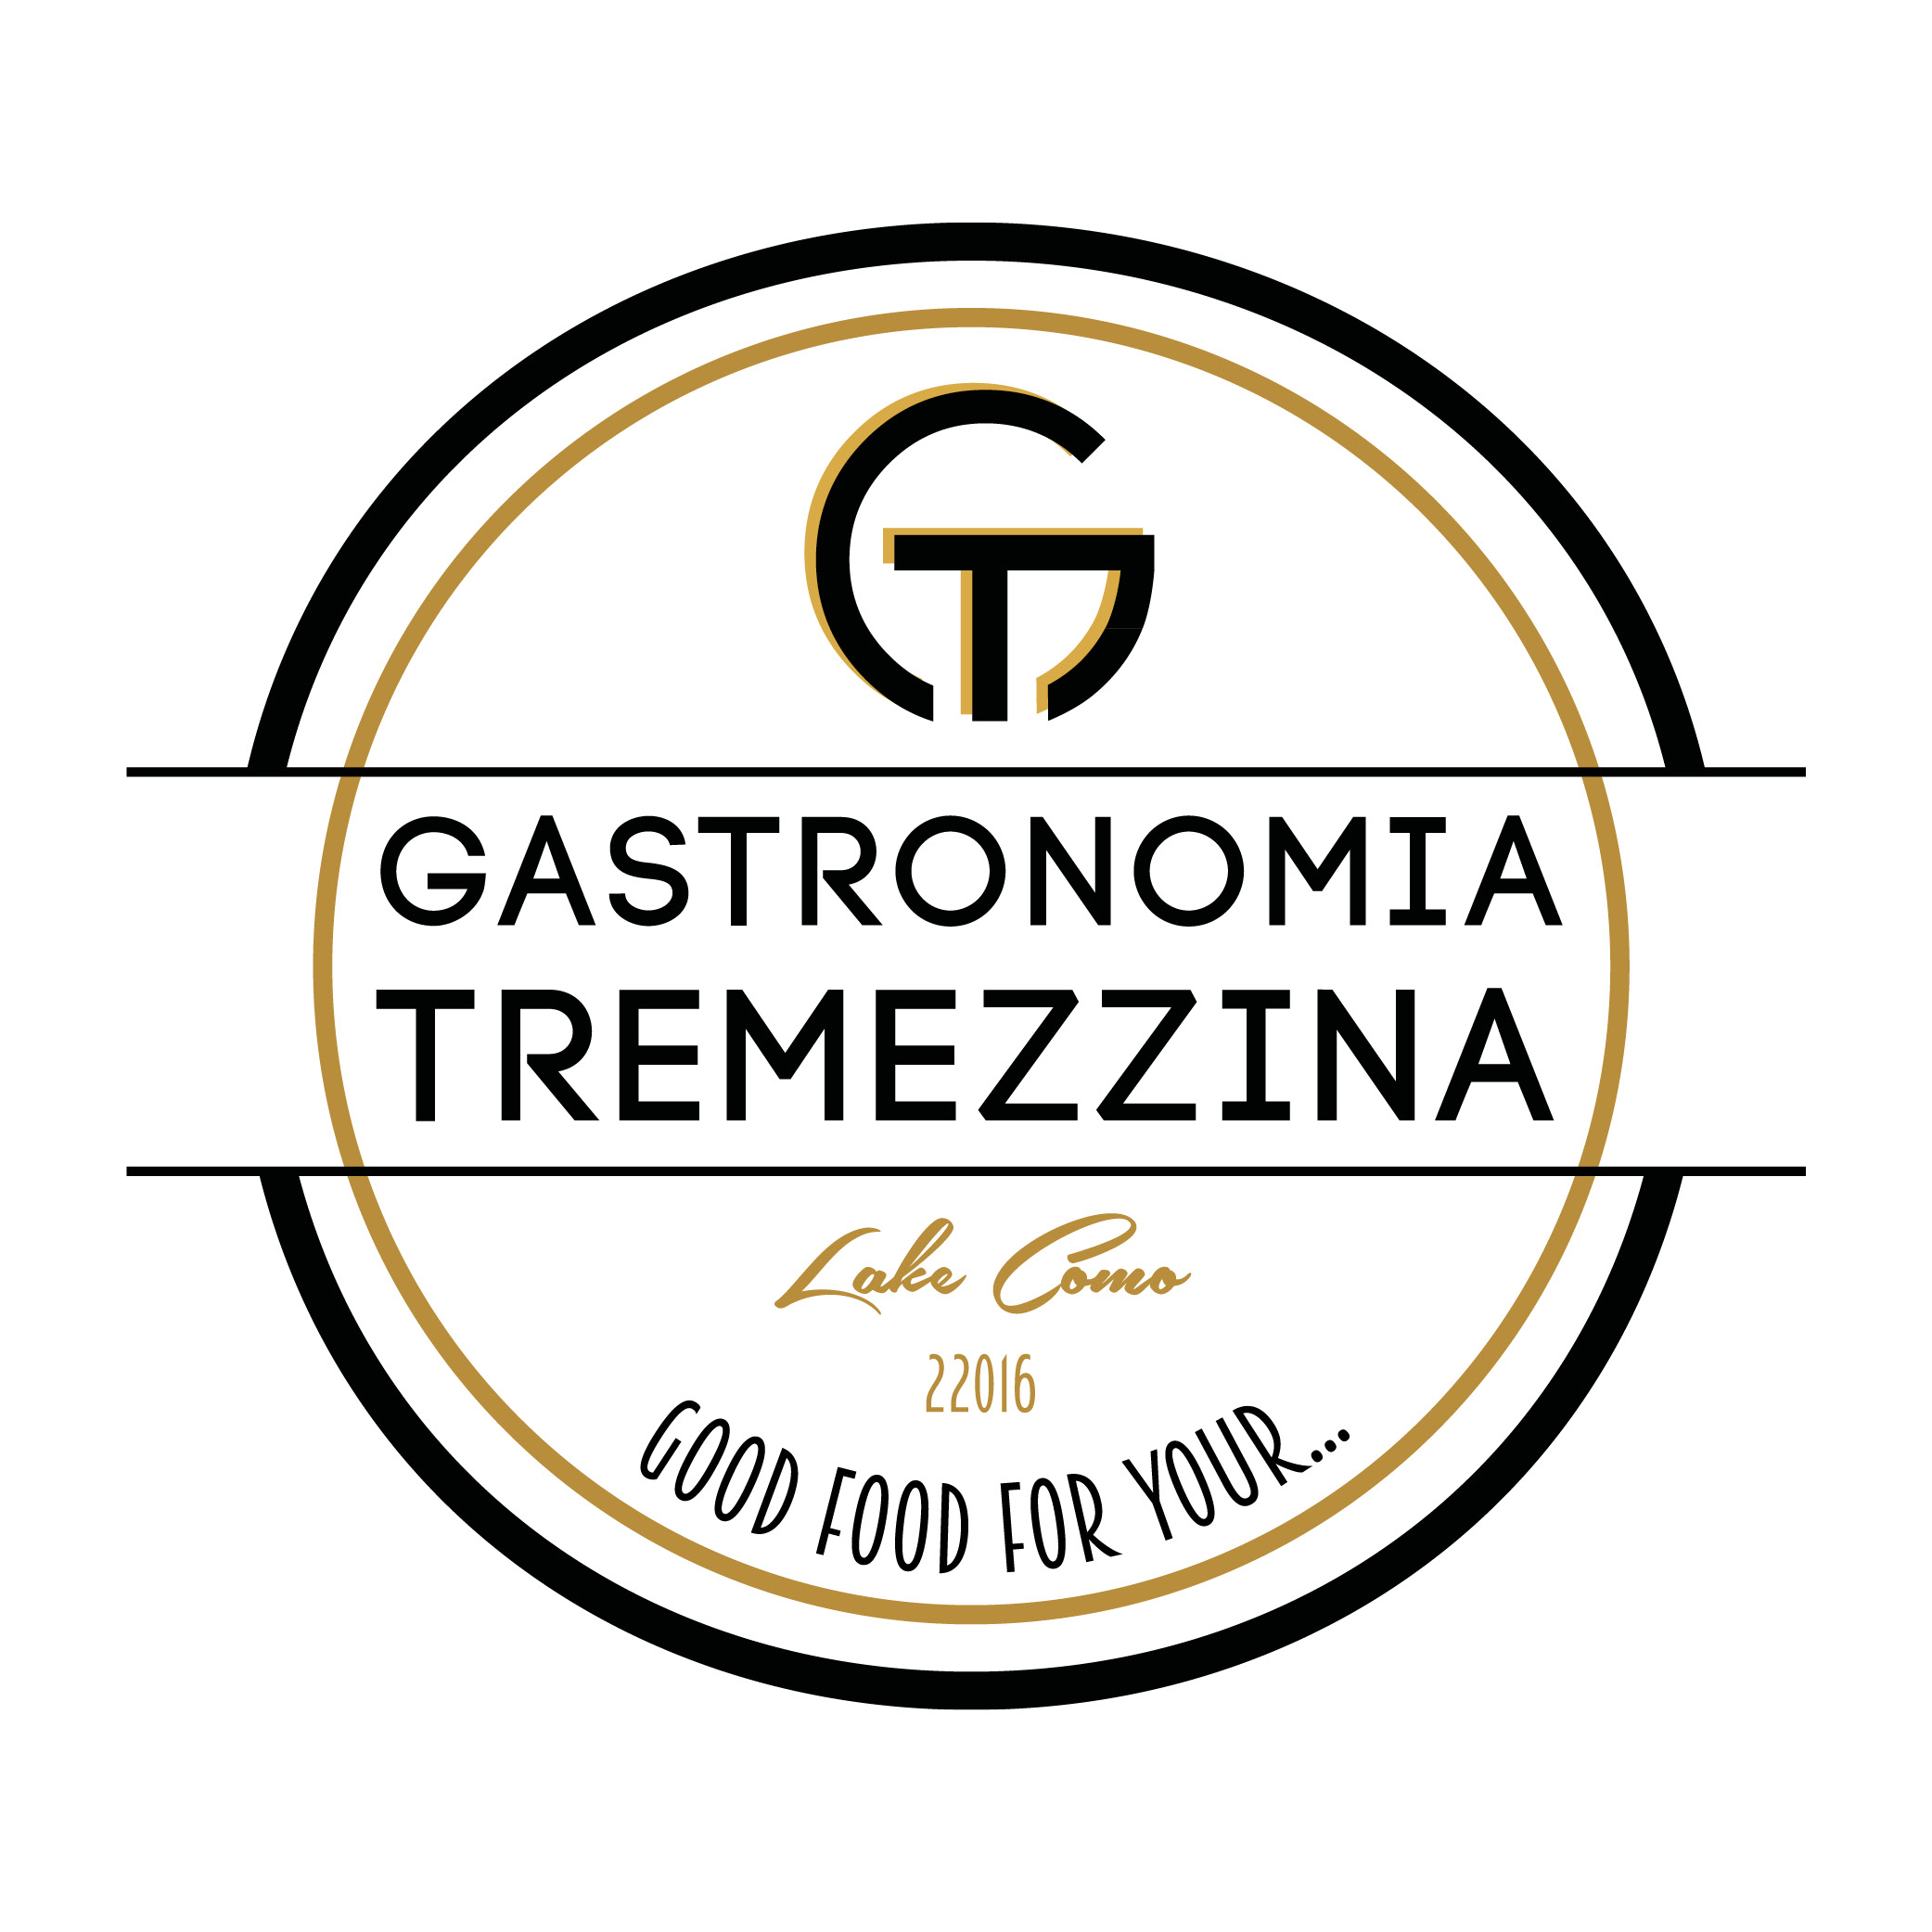 Gastronomia Tremezzina